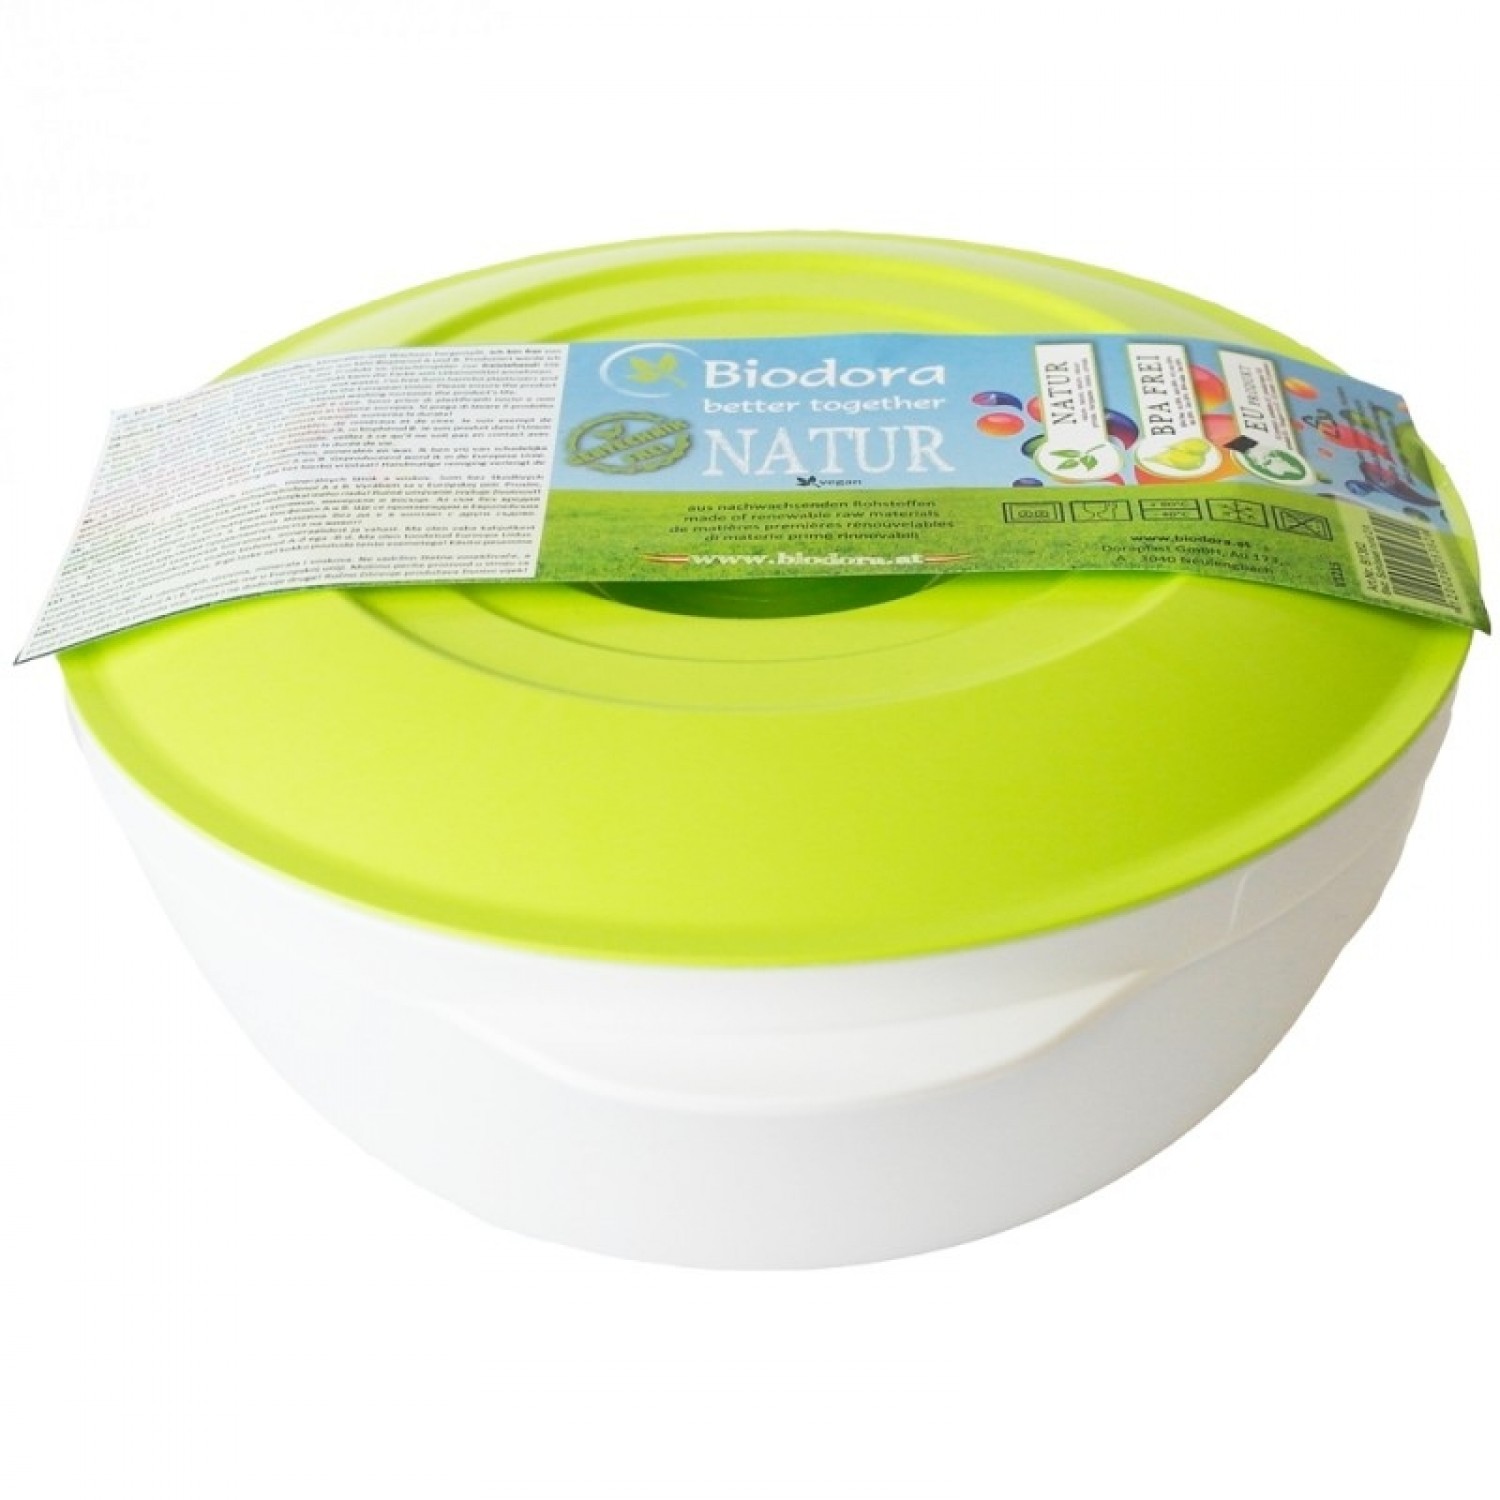 Bioplastic 1 Litre Bowl with Lid and Bowl Set | Biodora